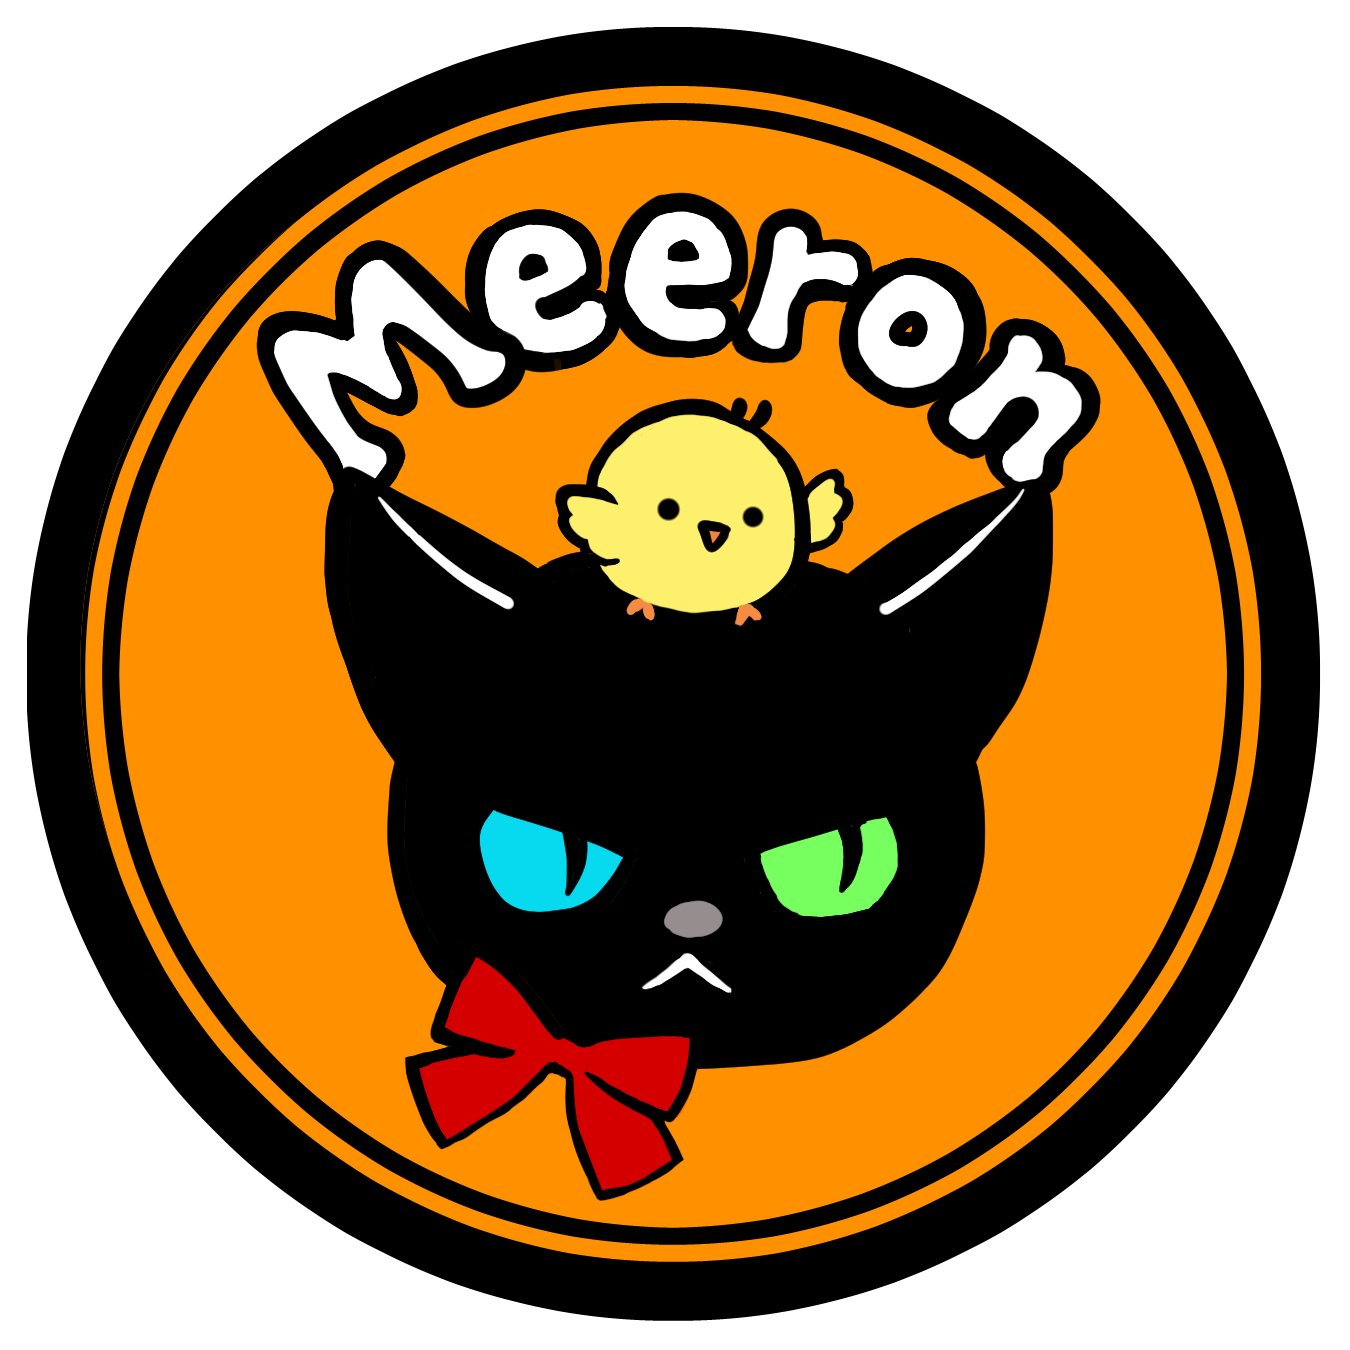 Meeron official web